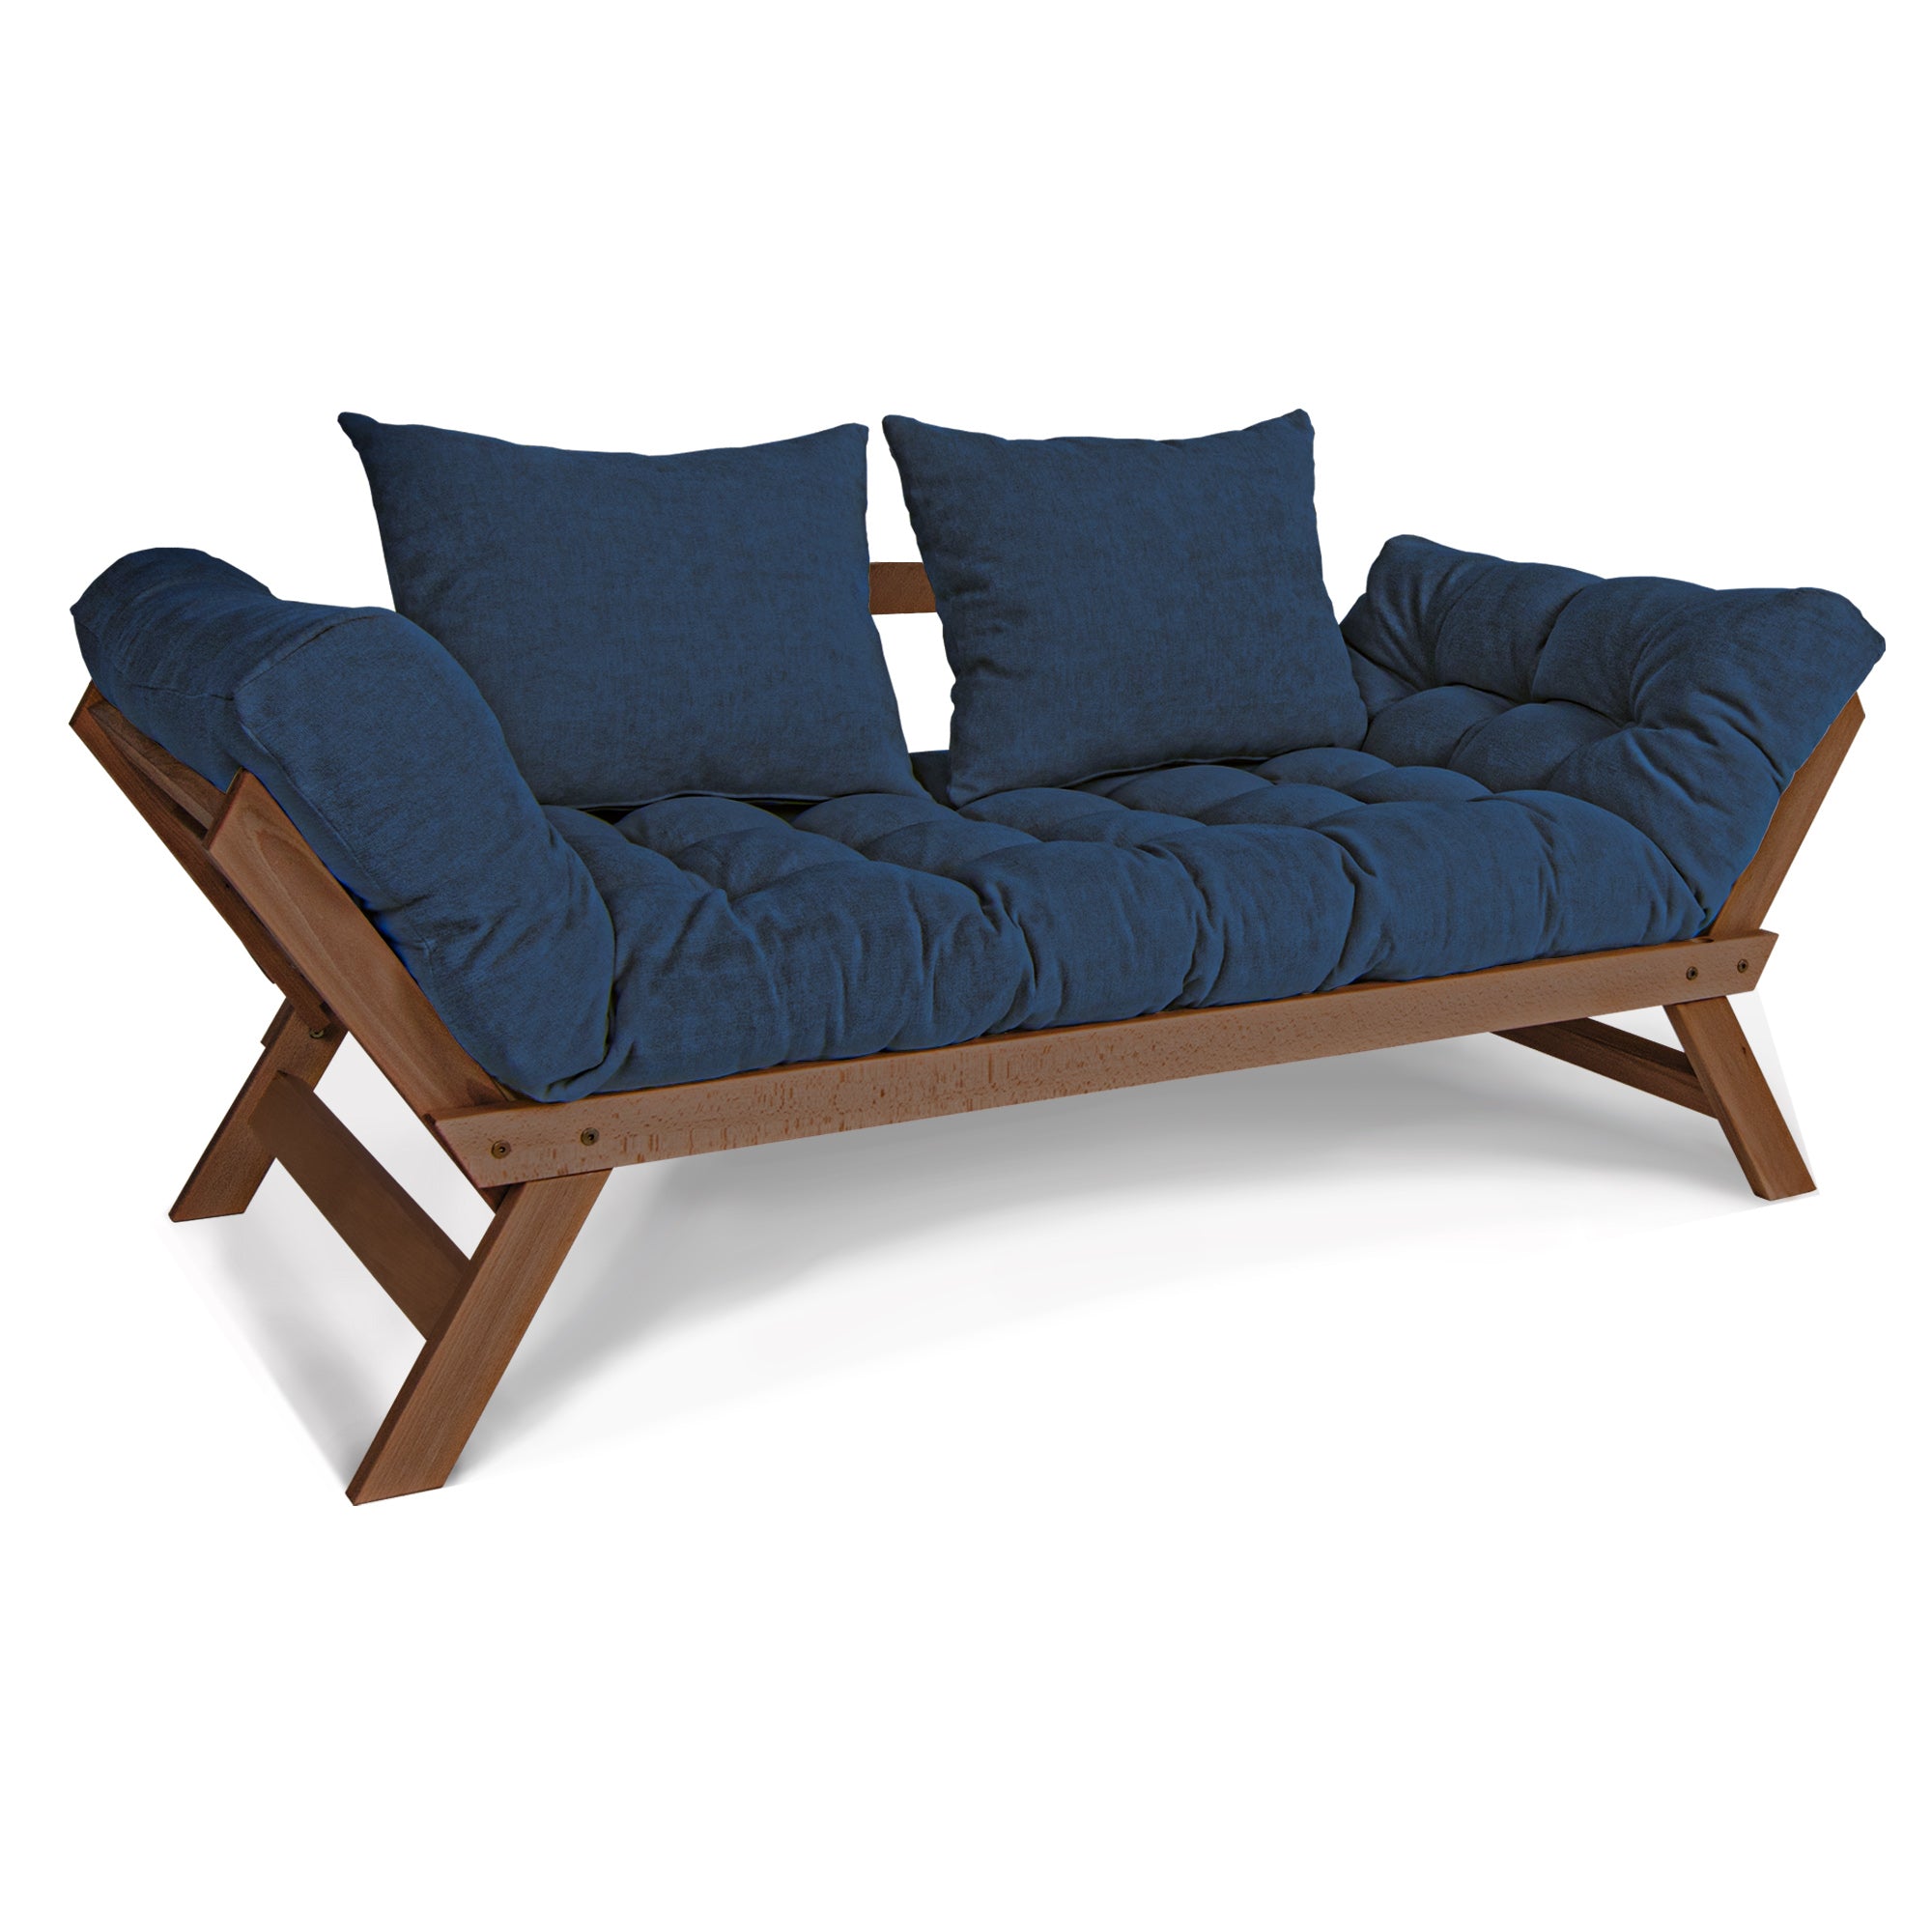 ALLEGRO Folding Sofa Bed, Beech Wood Frame, Walnut Colour upholstery blue